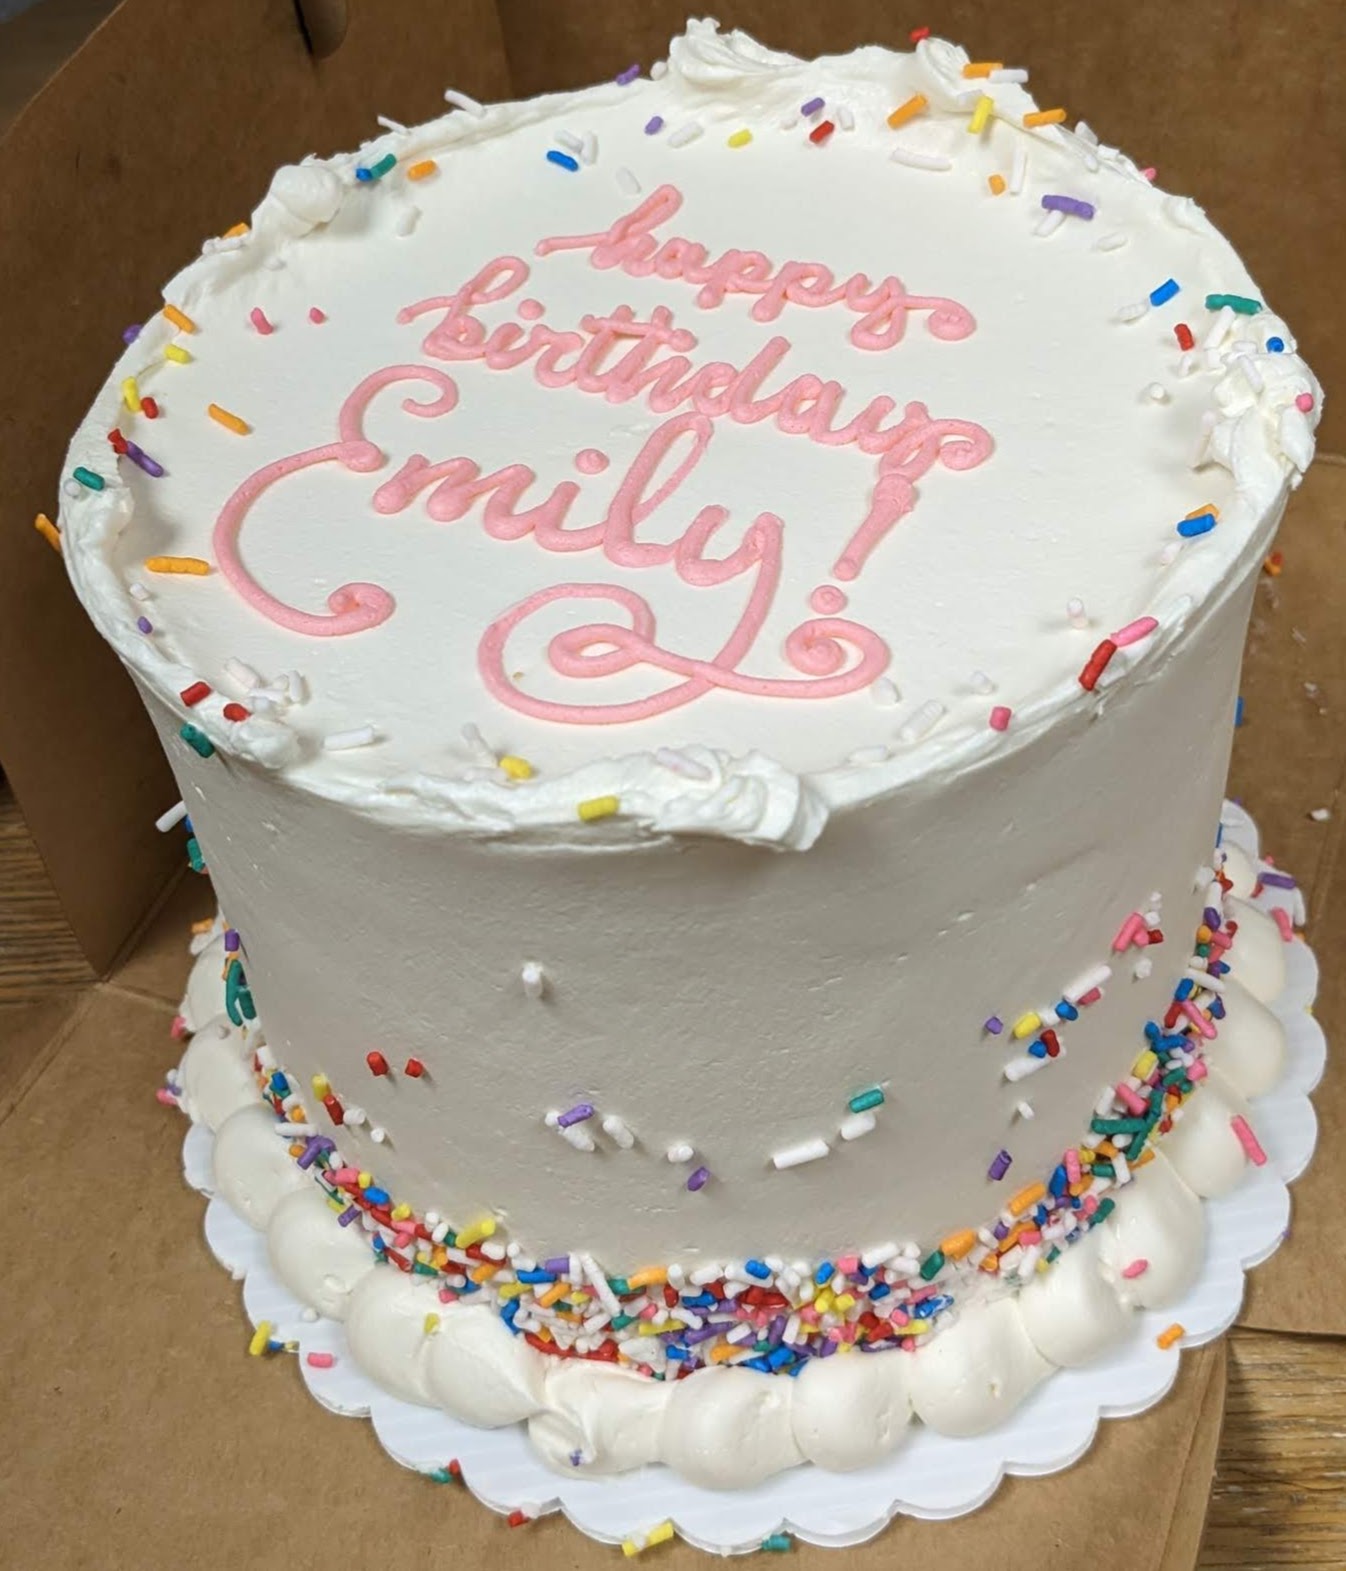 2023 cake for Emily's birthday